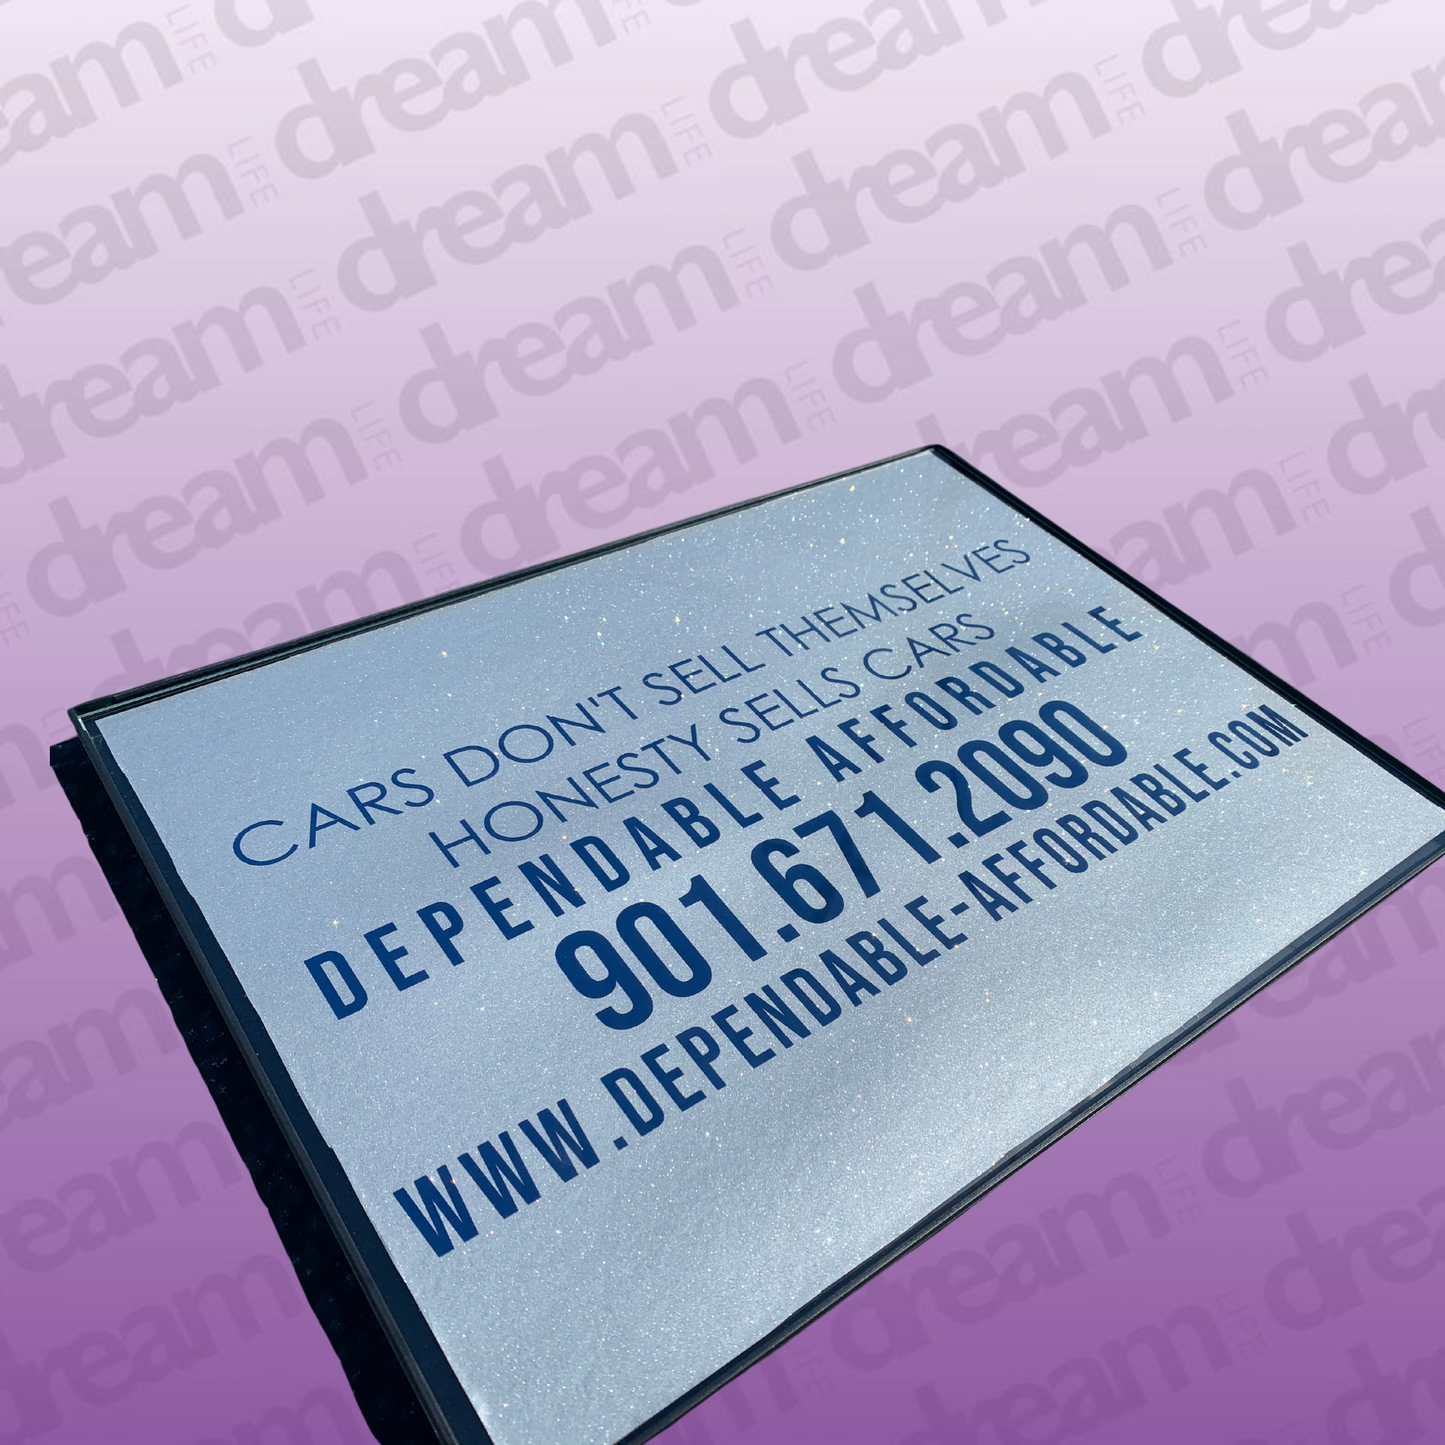 Custom Dream Exclusive Promo & Price Boards